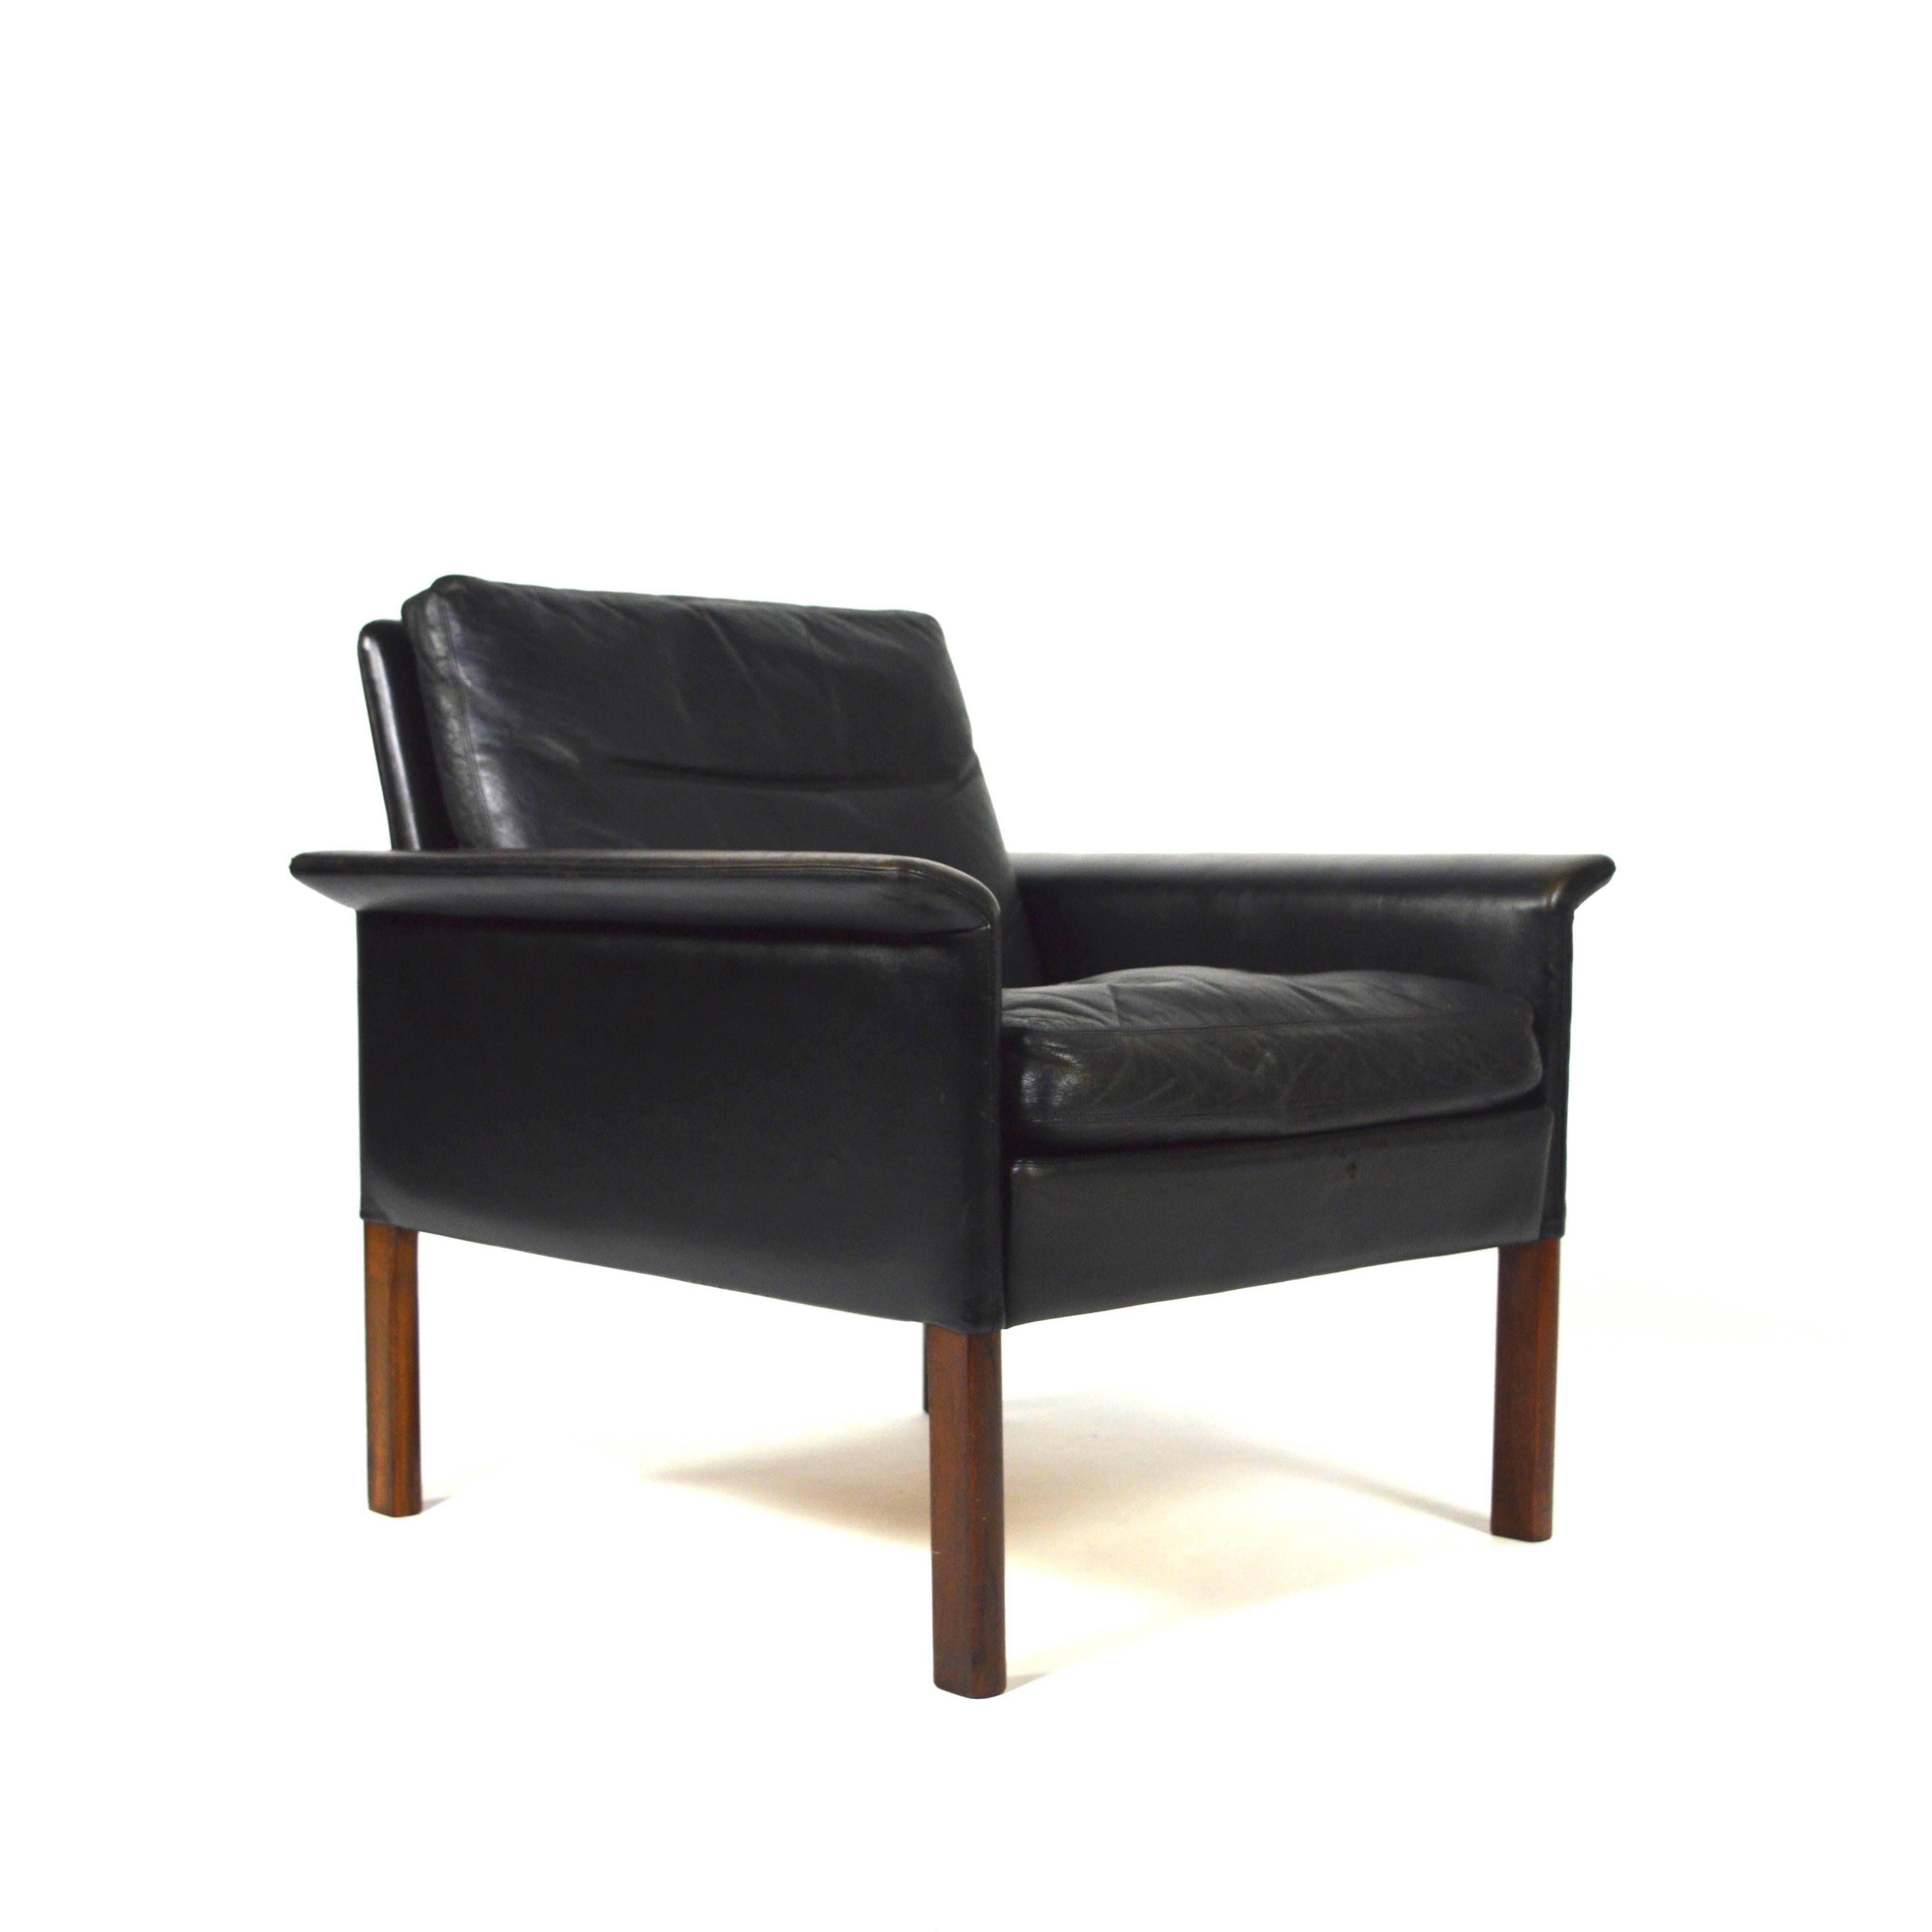 Danish Hans Olsen Model 500 Lounge Chair in Black Leather and Rosewood, Denmark, 1960s